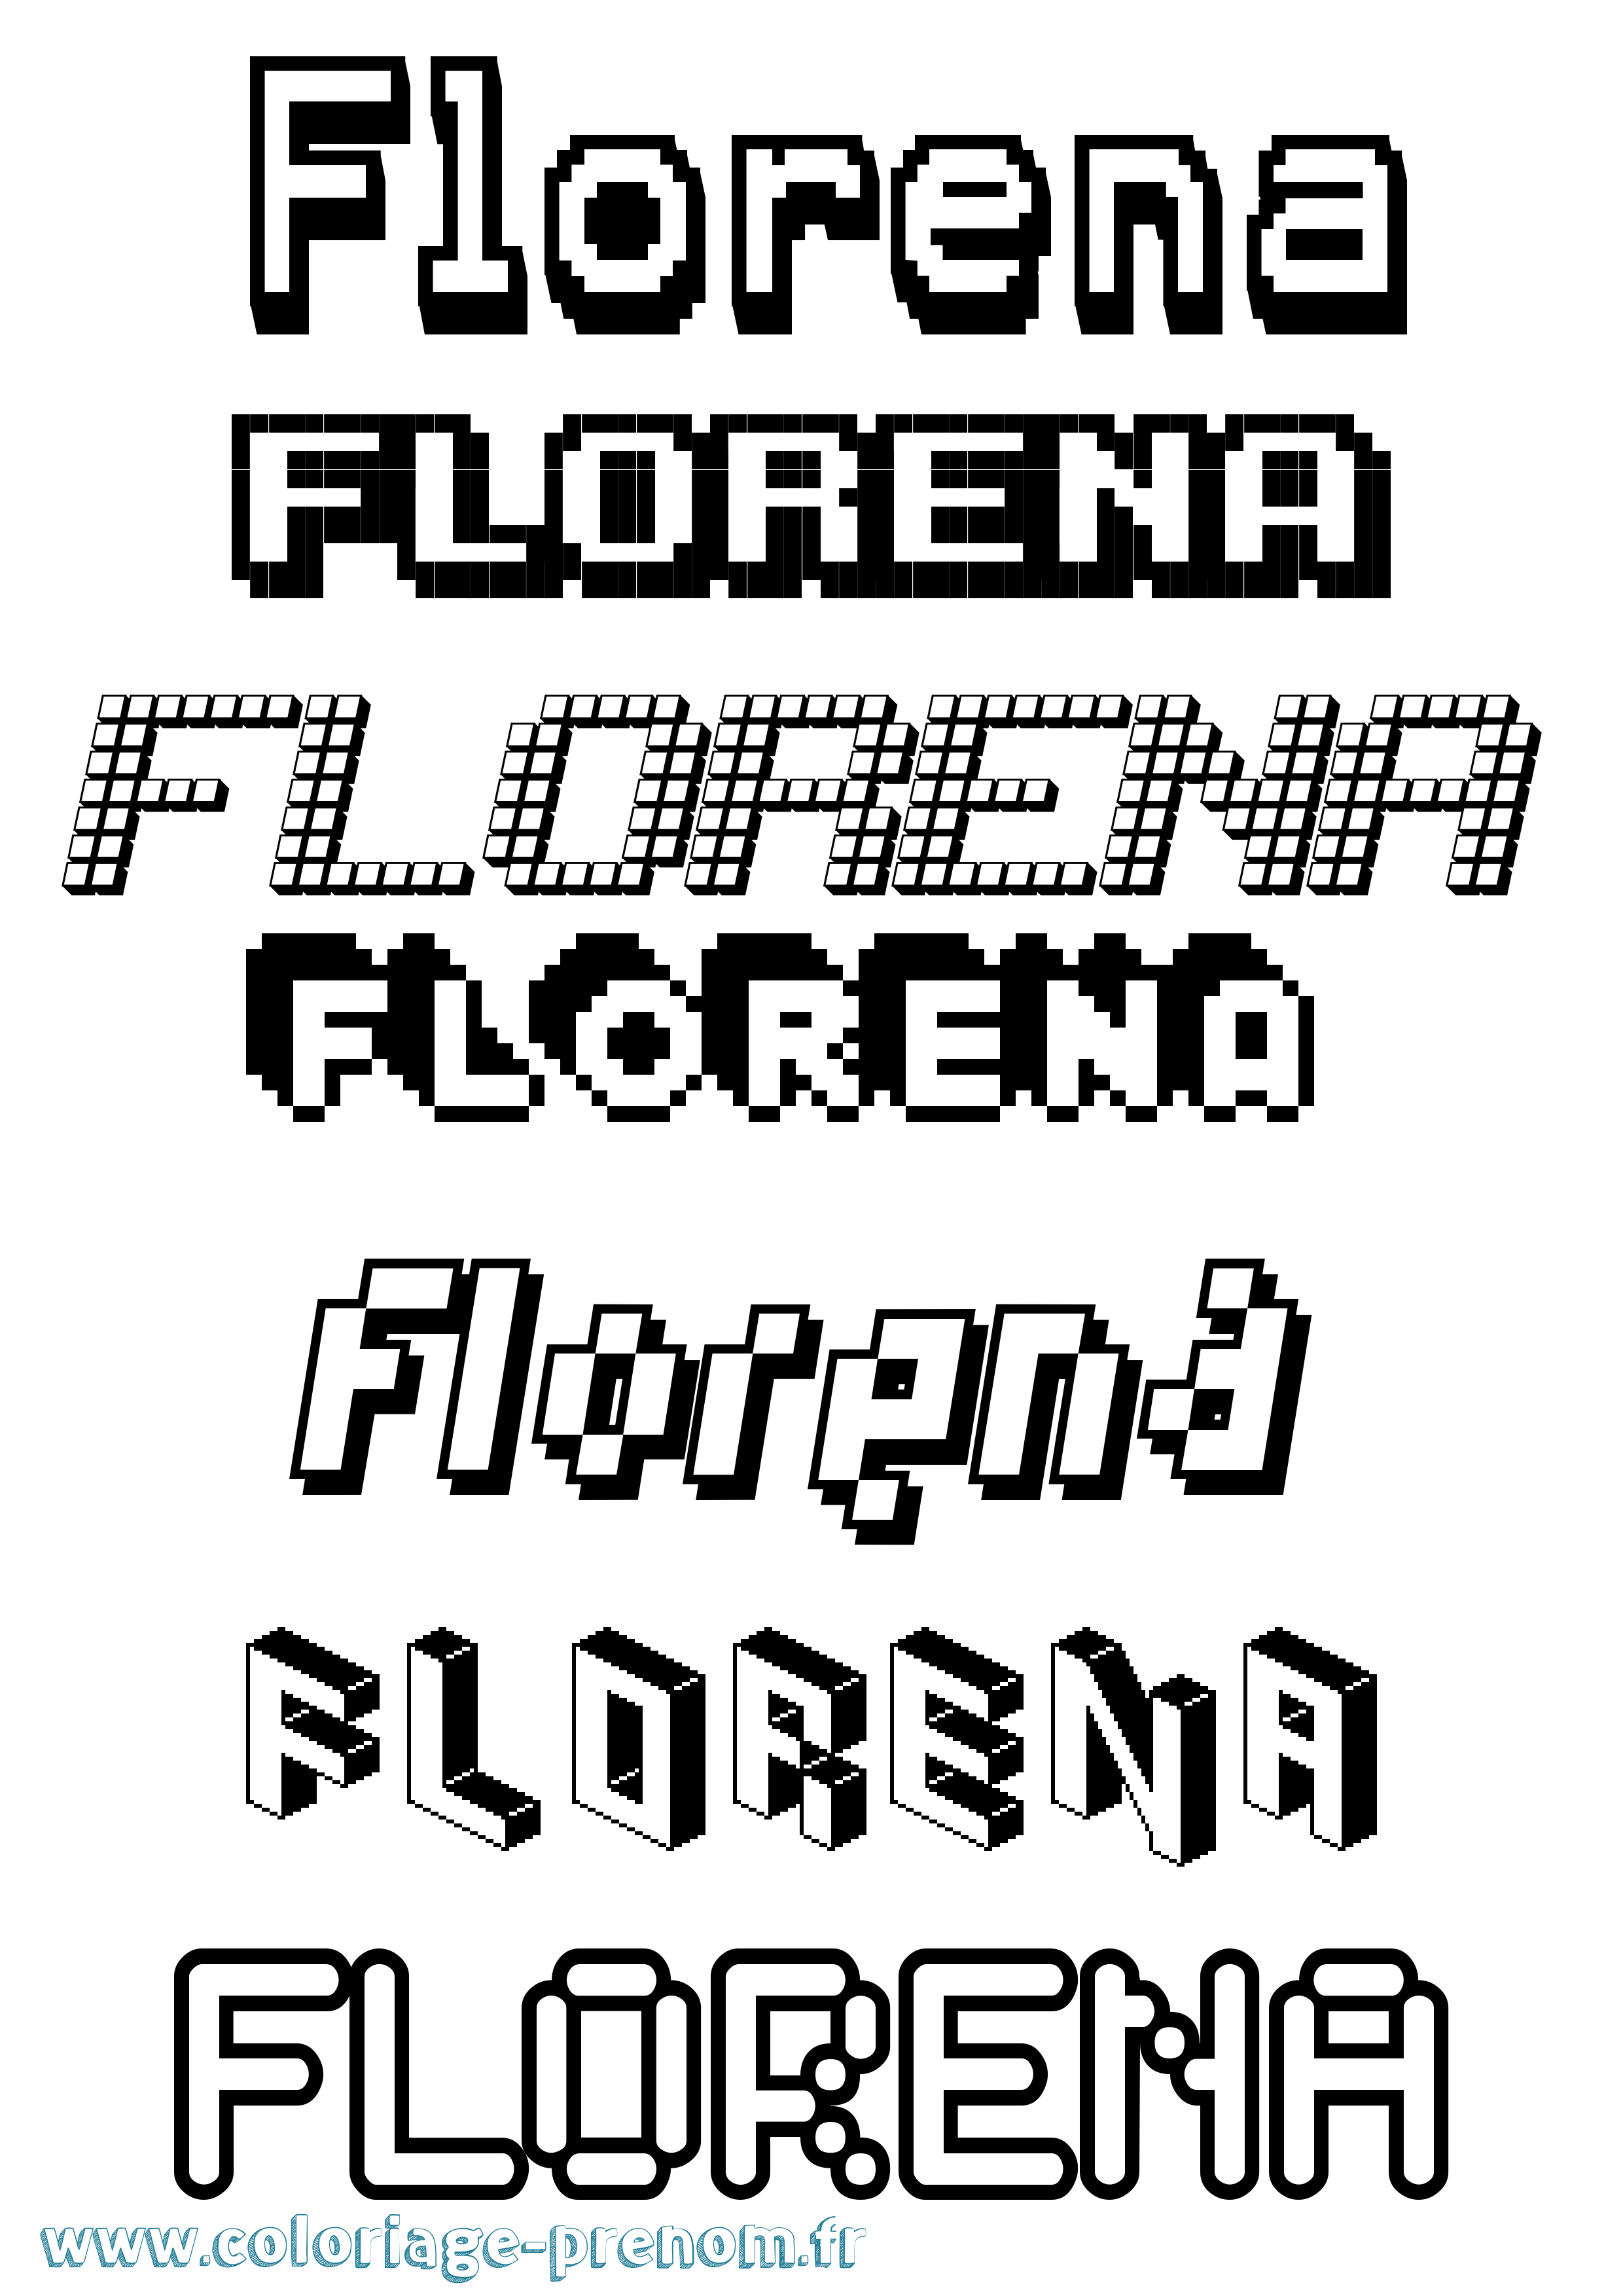 Coloriage prénom Florena Pixel